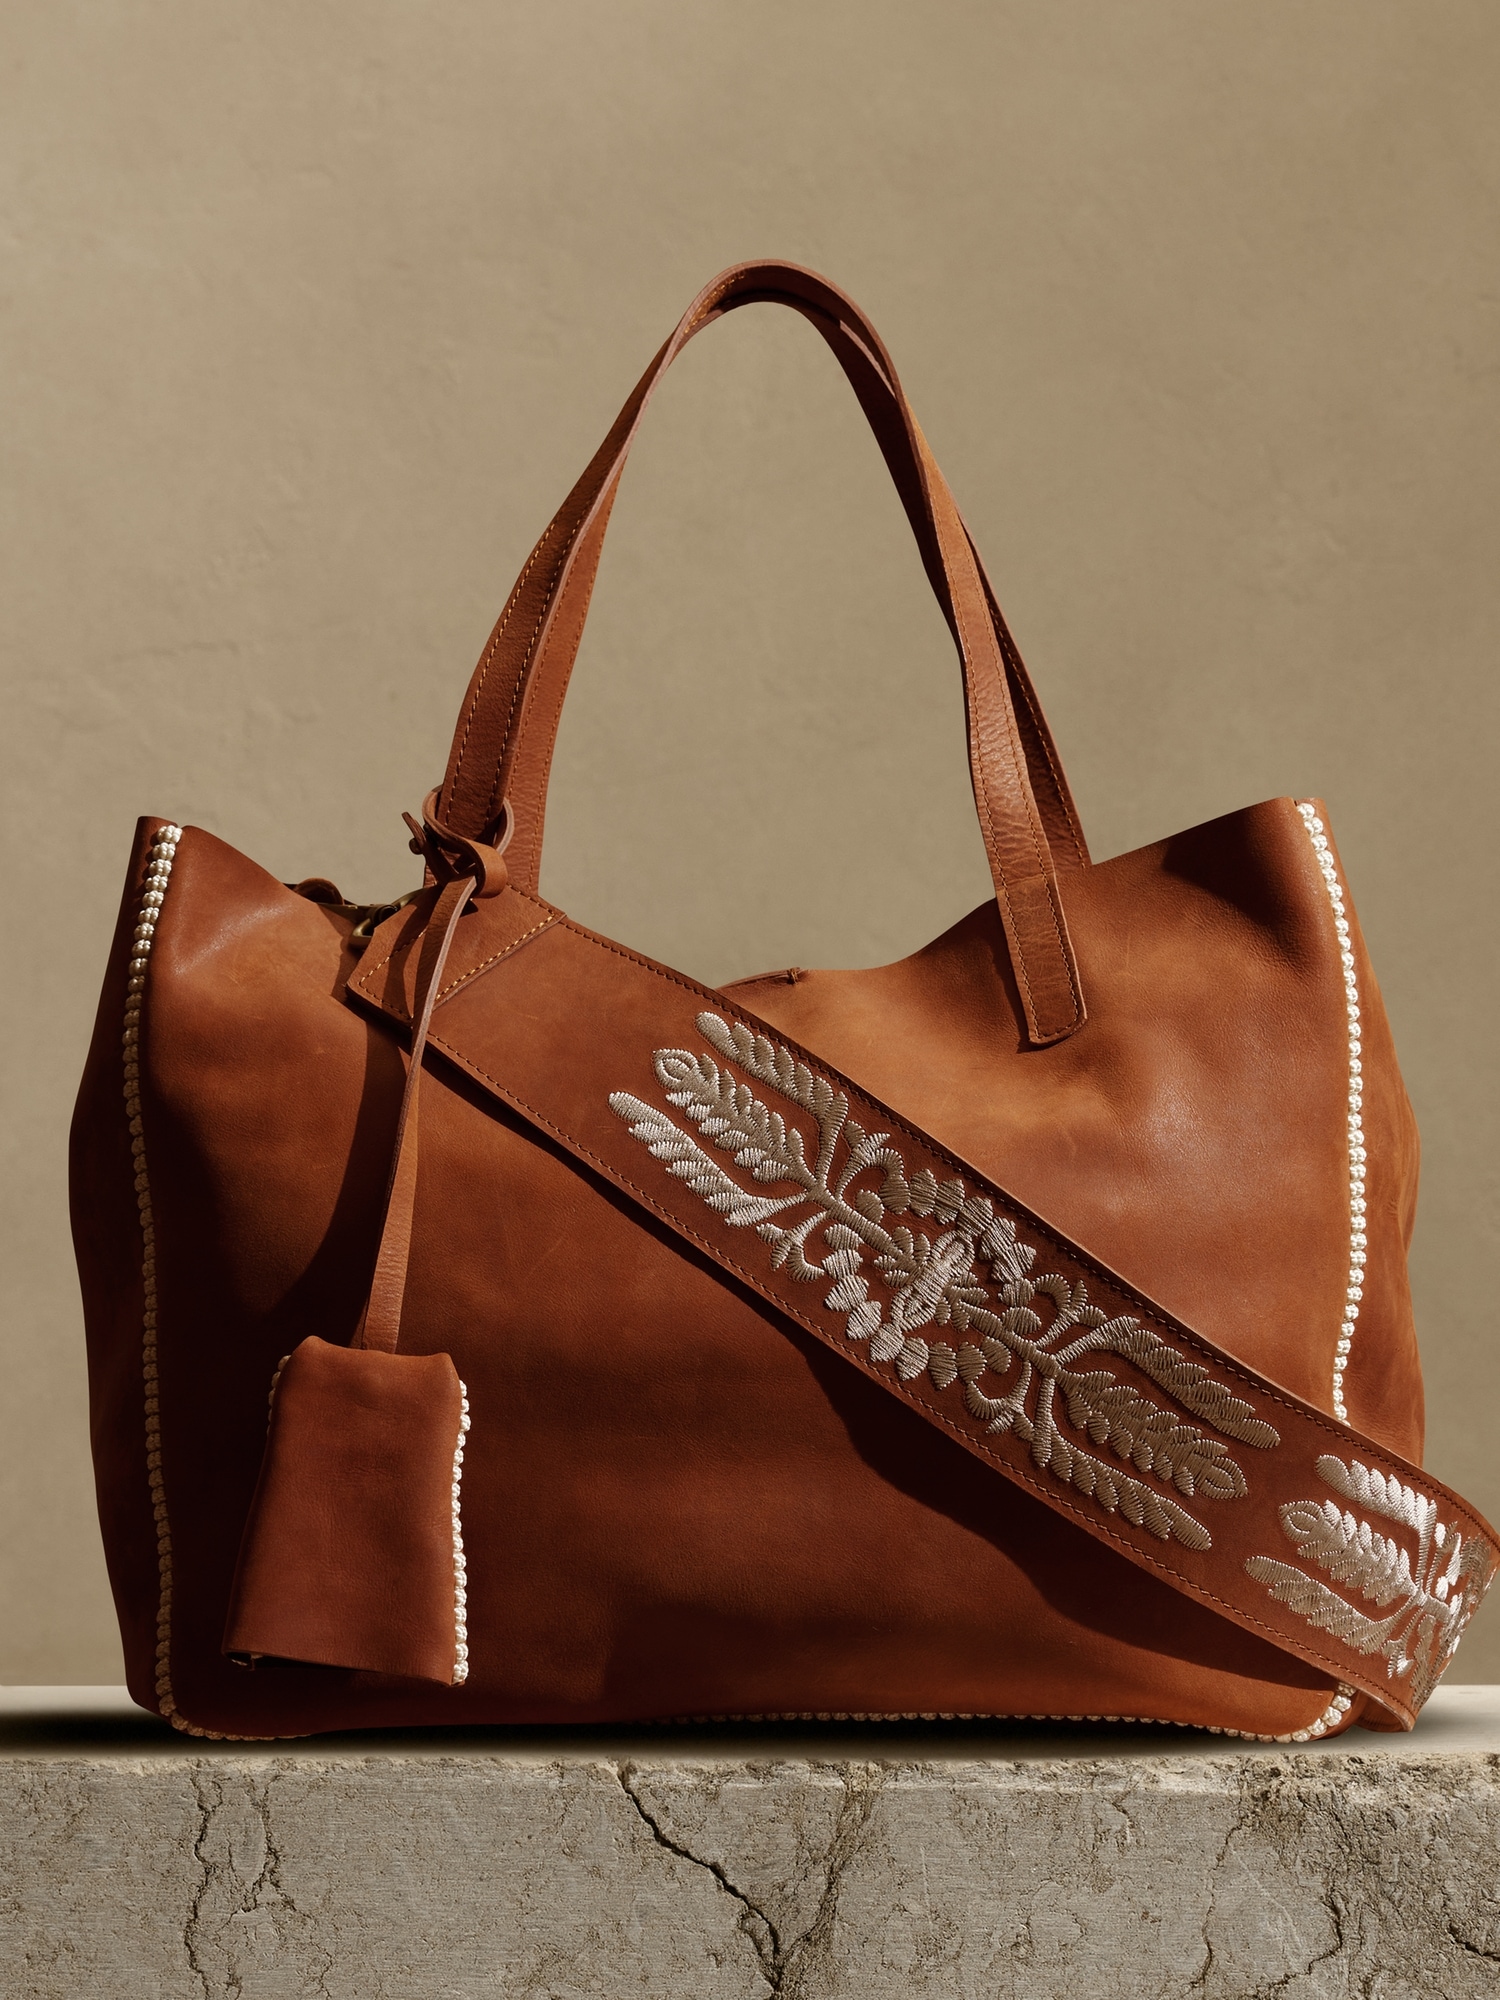 Banana Republic Women's Marrakesh Leather Belt Bag New Cognac Brown One Size